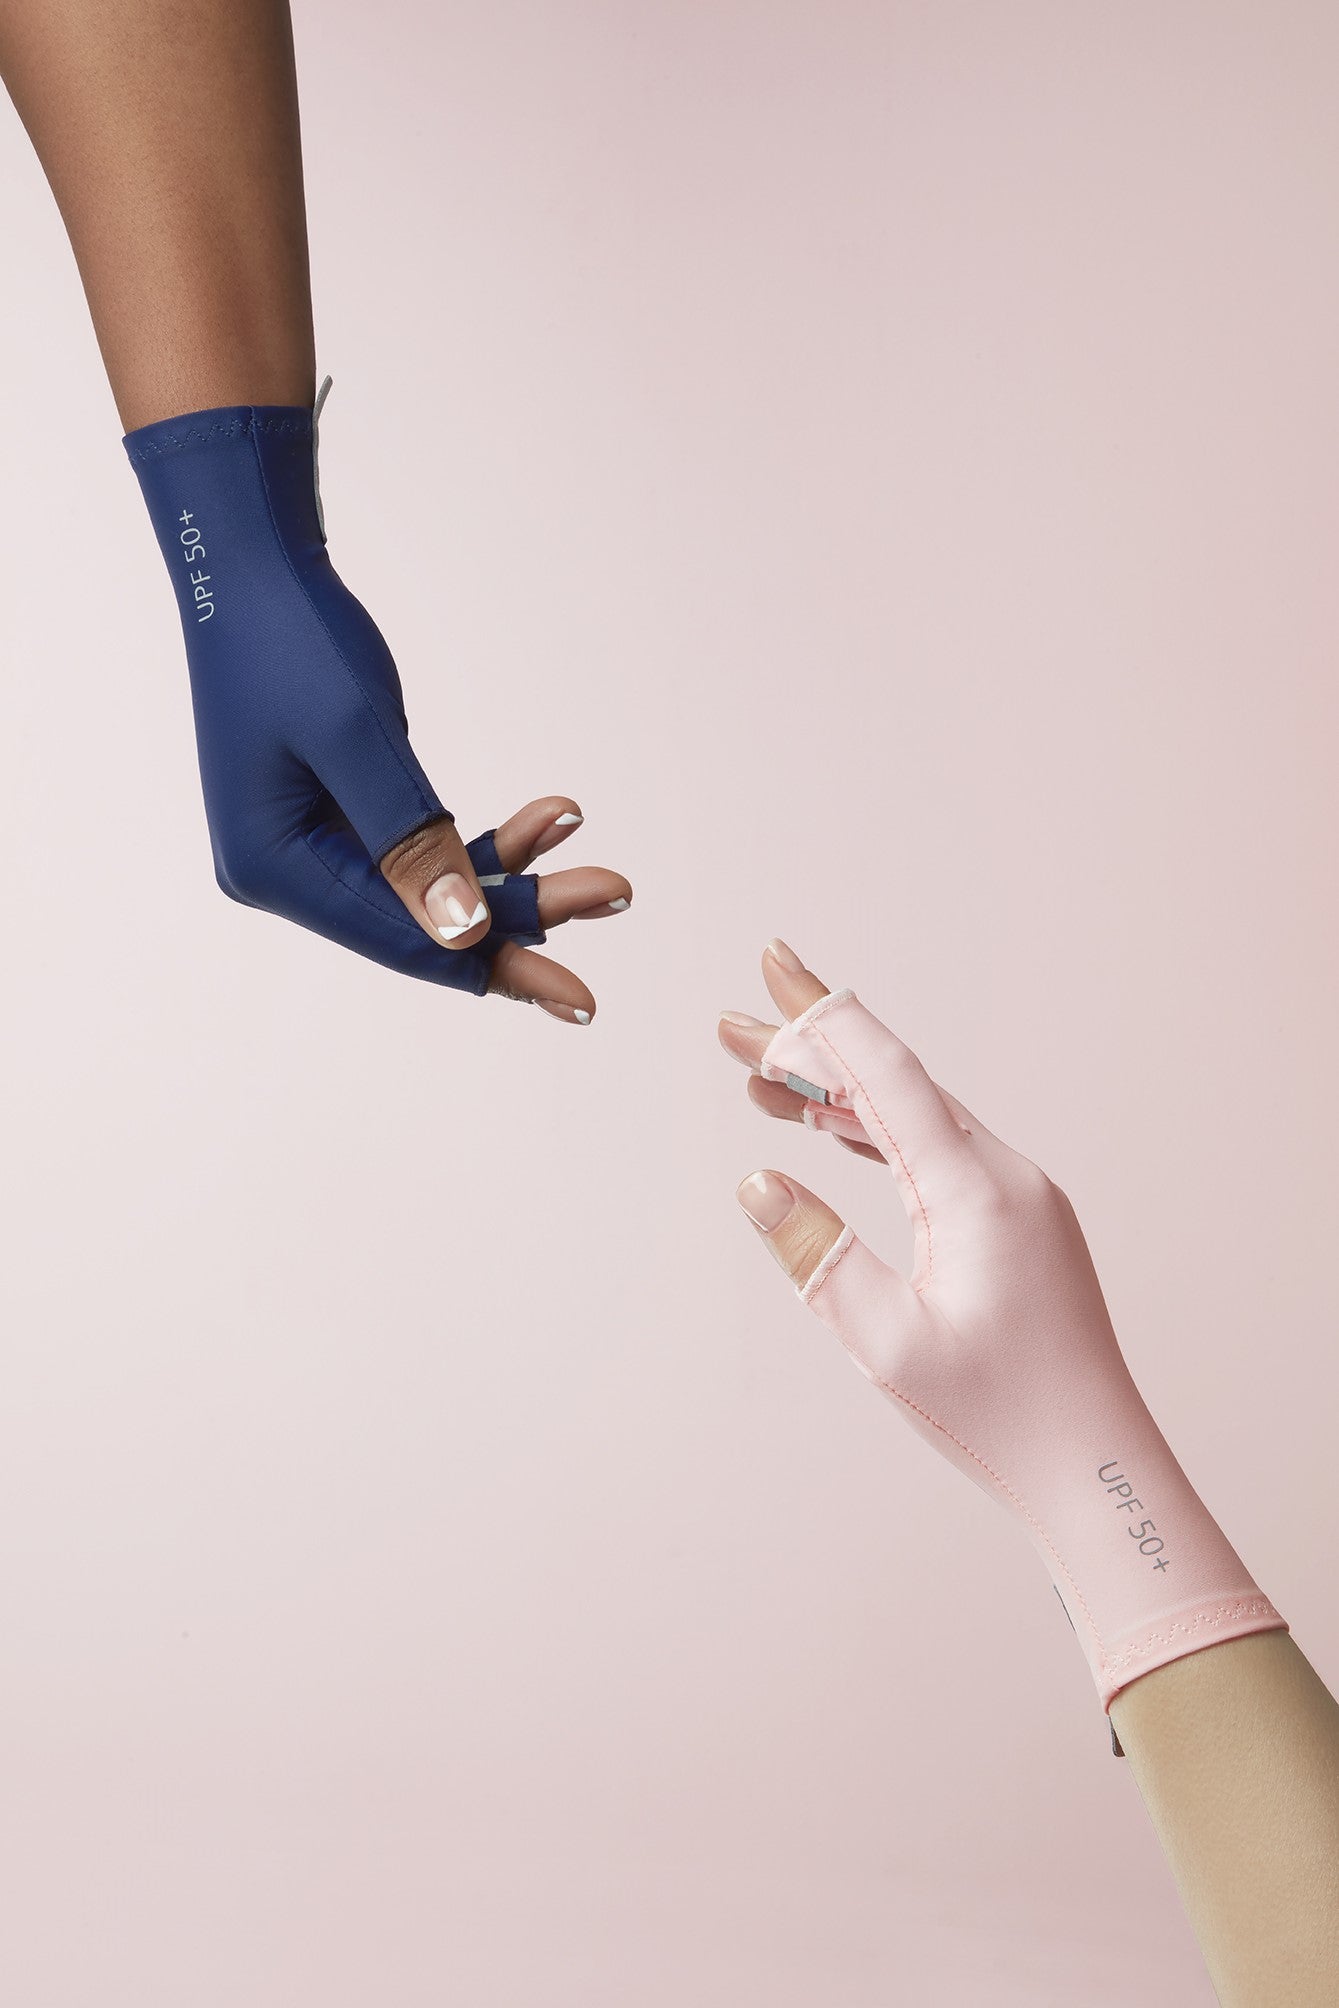 UV gloves Protect Hands 1 pair – Beauty Zone Nail Supply